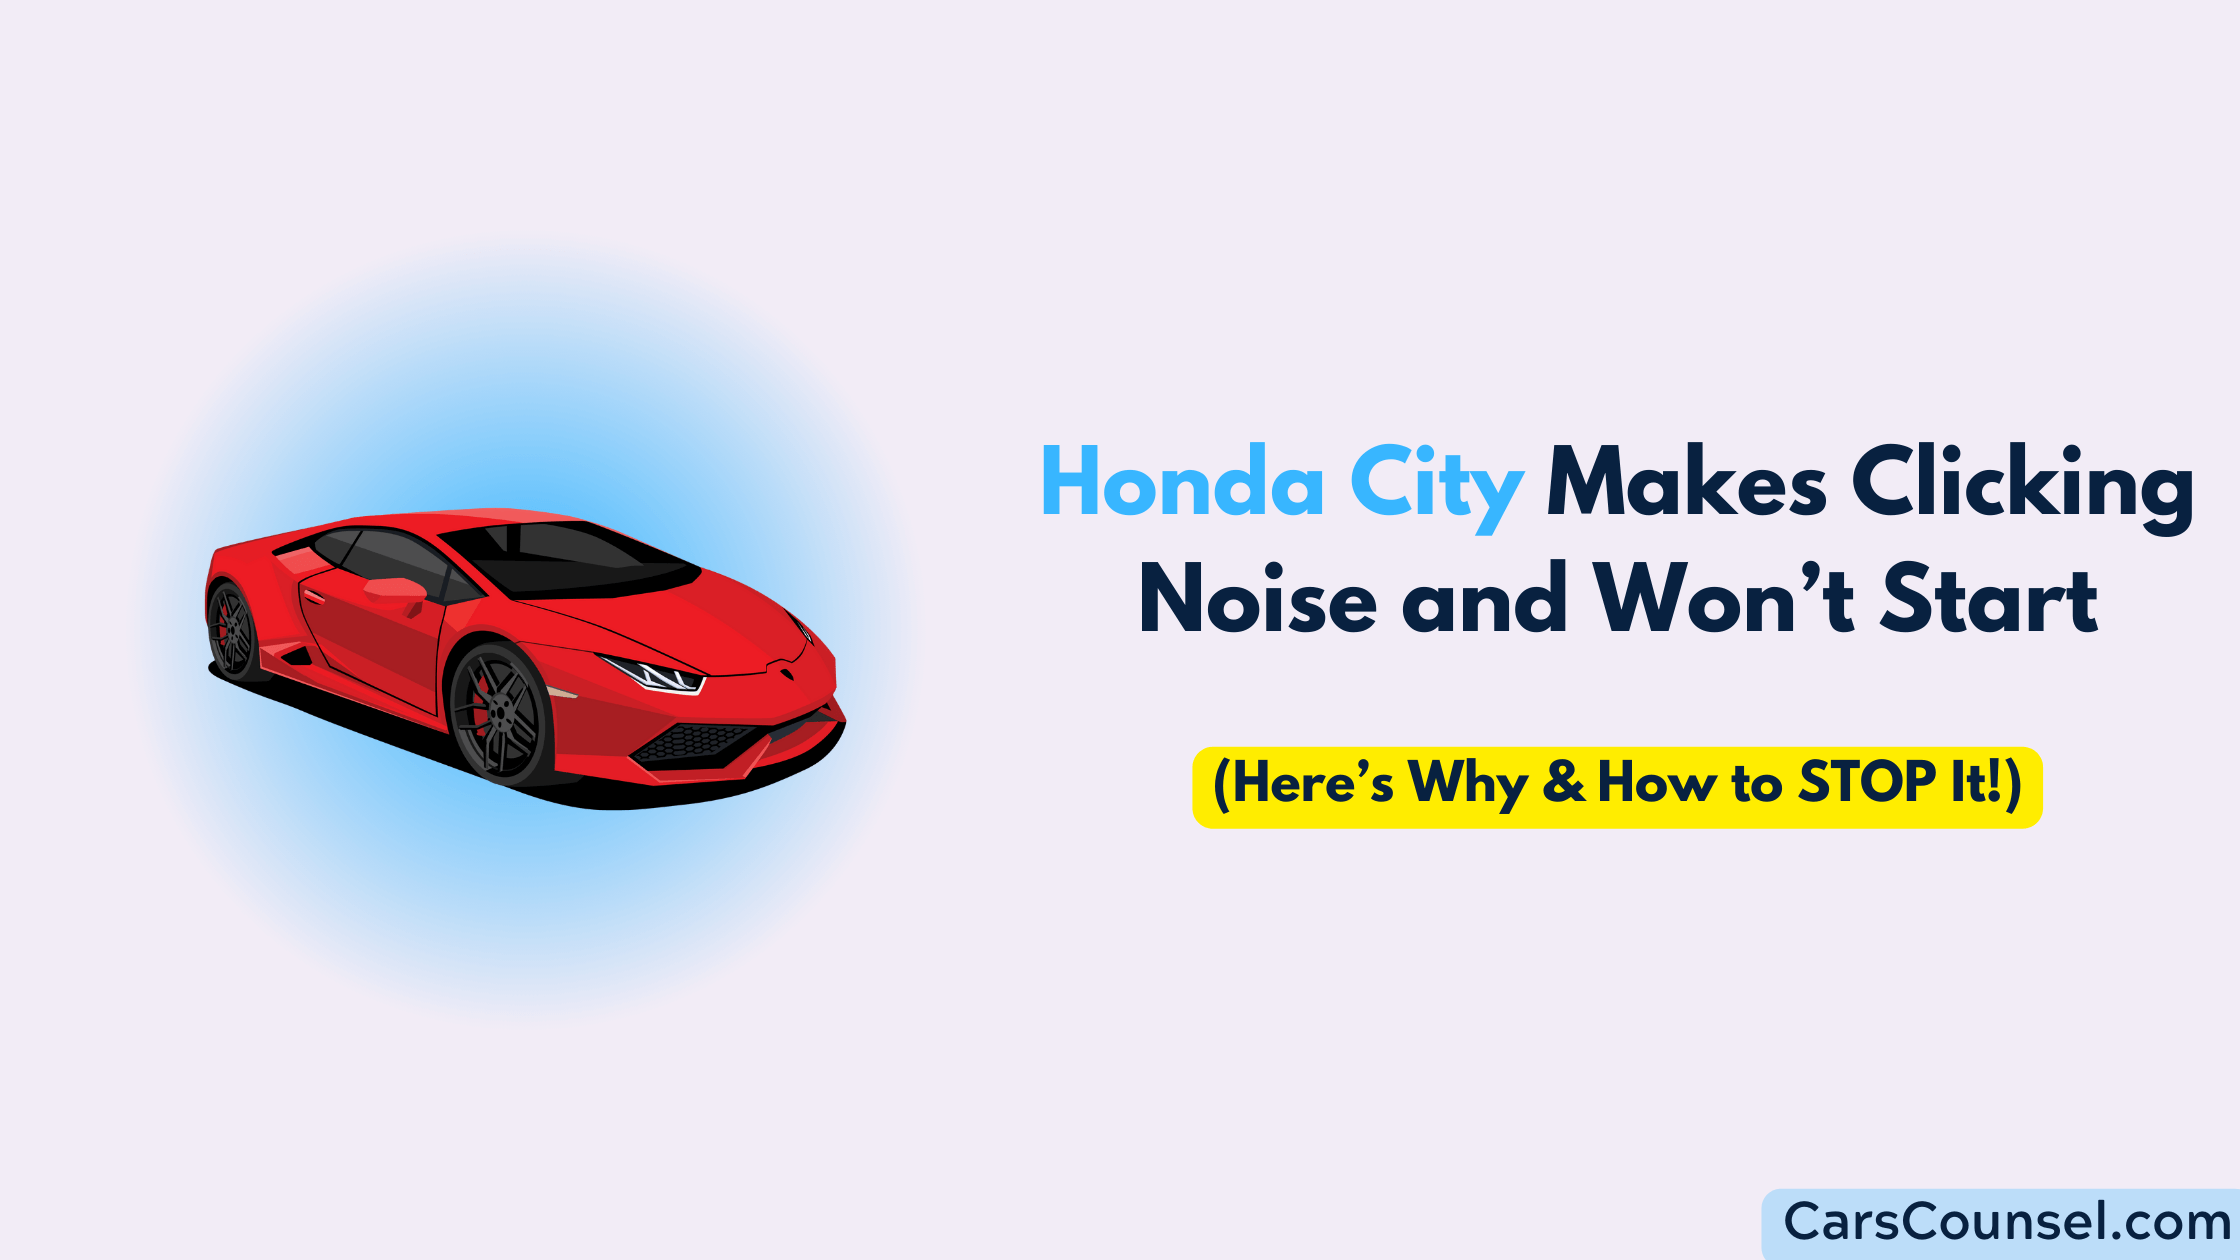 Honda City Makes Clicking Noise and Won’t Start